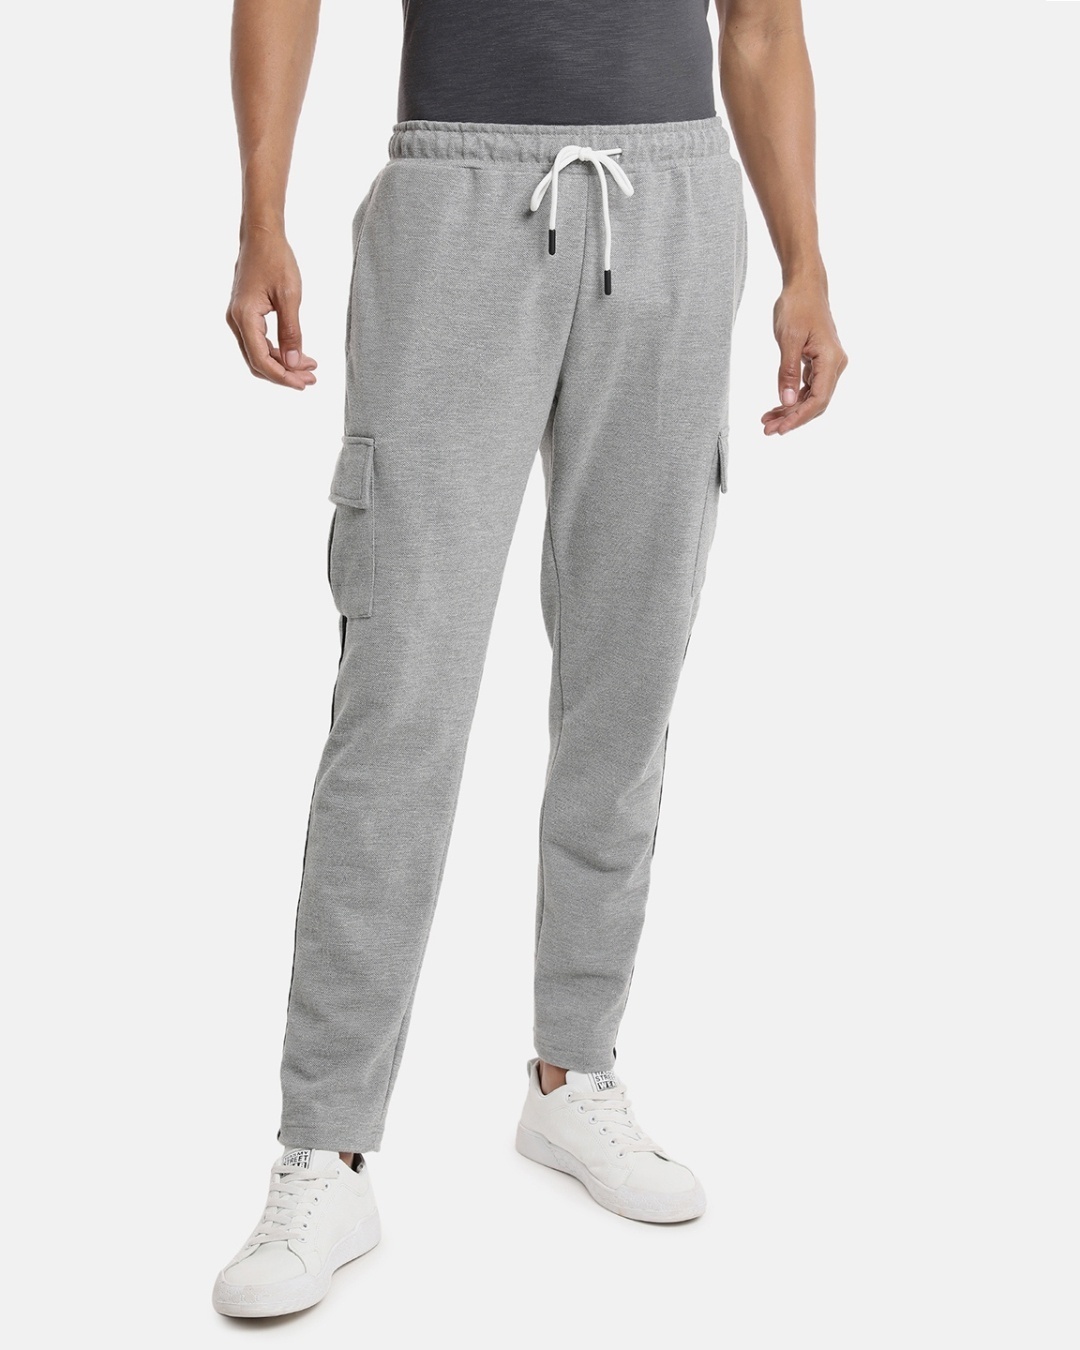 Buy Men's Grey Slim Fit Cotton Track Pants Online at Bewakoof